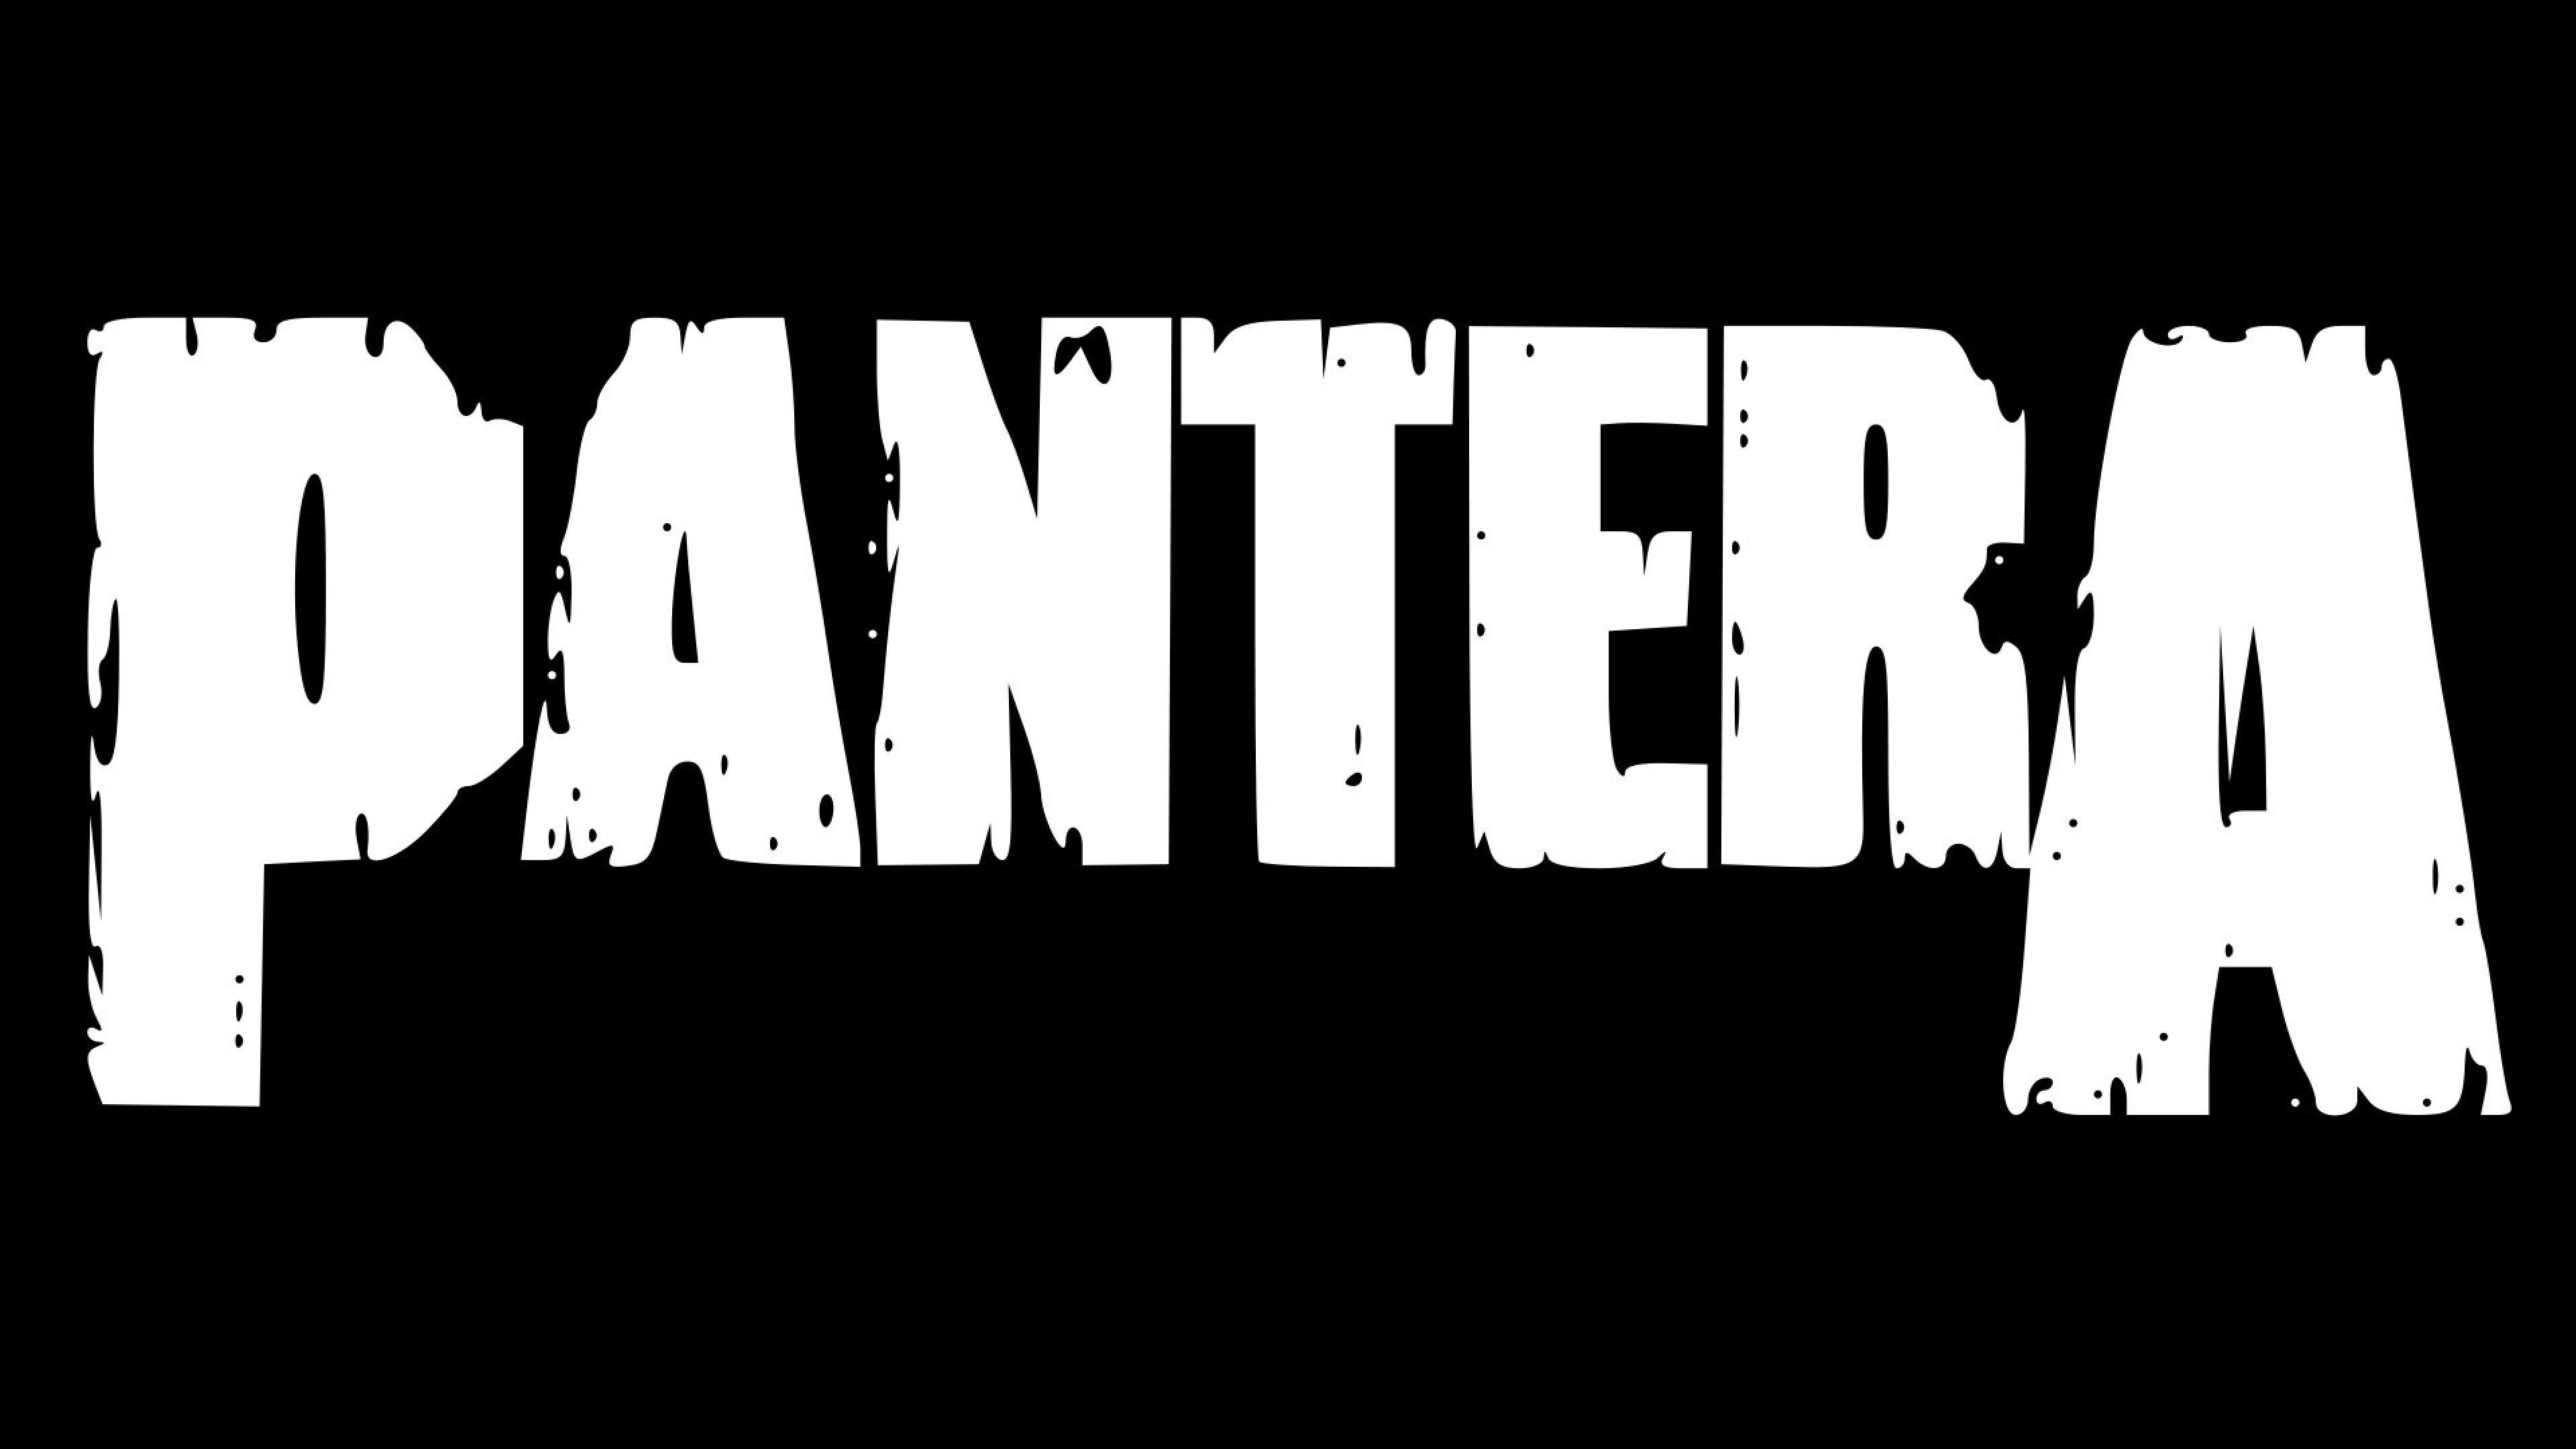 Pantera Logo Wallpapers Wallpaper Cave